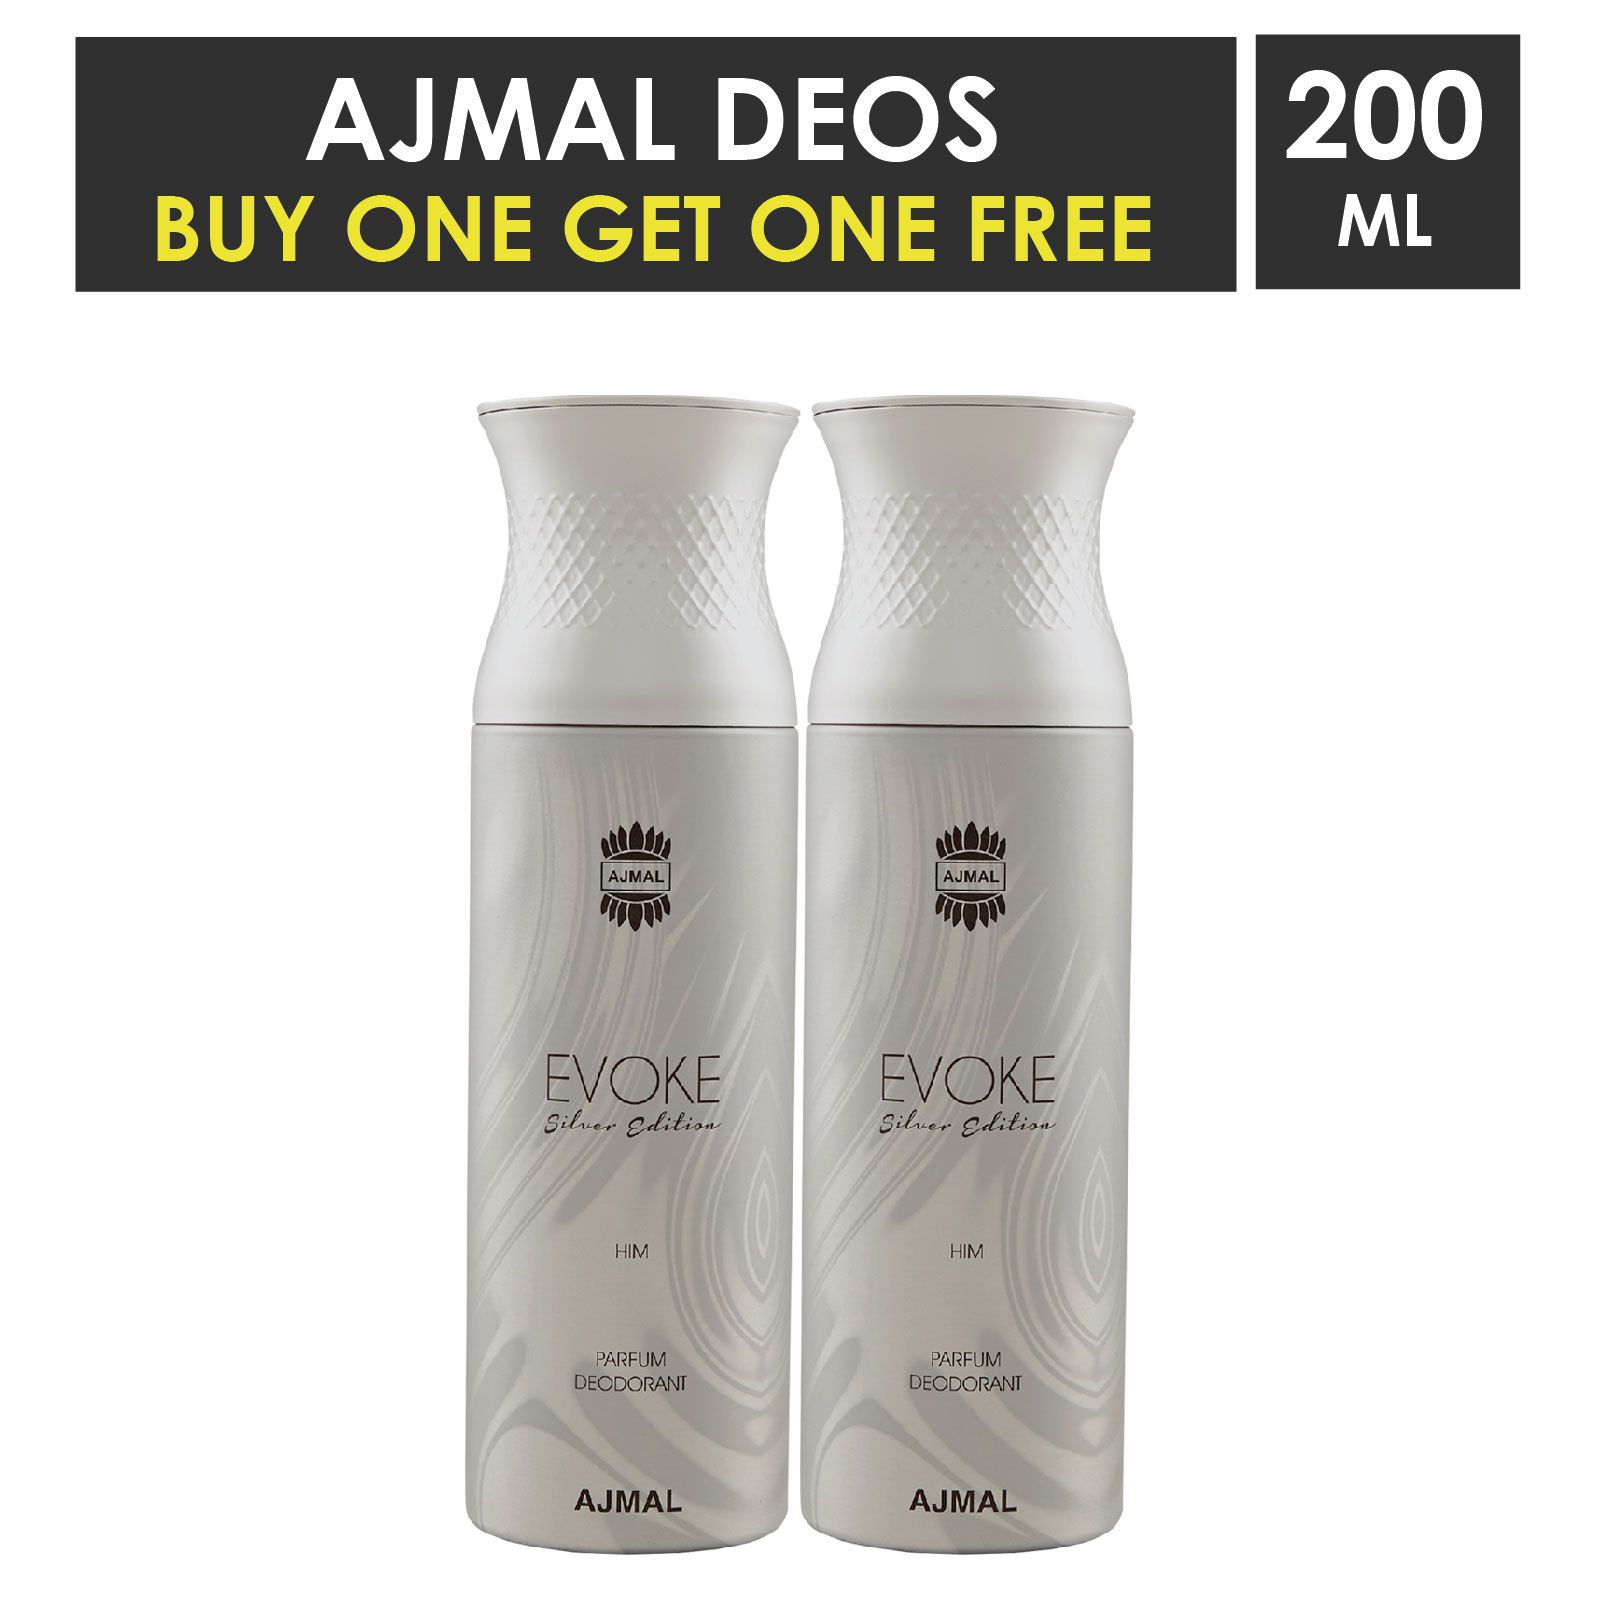     			Ajmal Evoke Silver Him And Evoke Silver Him Deodorants For Men 200mL Each (Buy 1 Get 1)